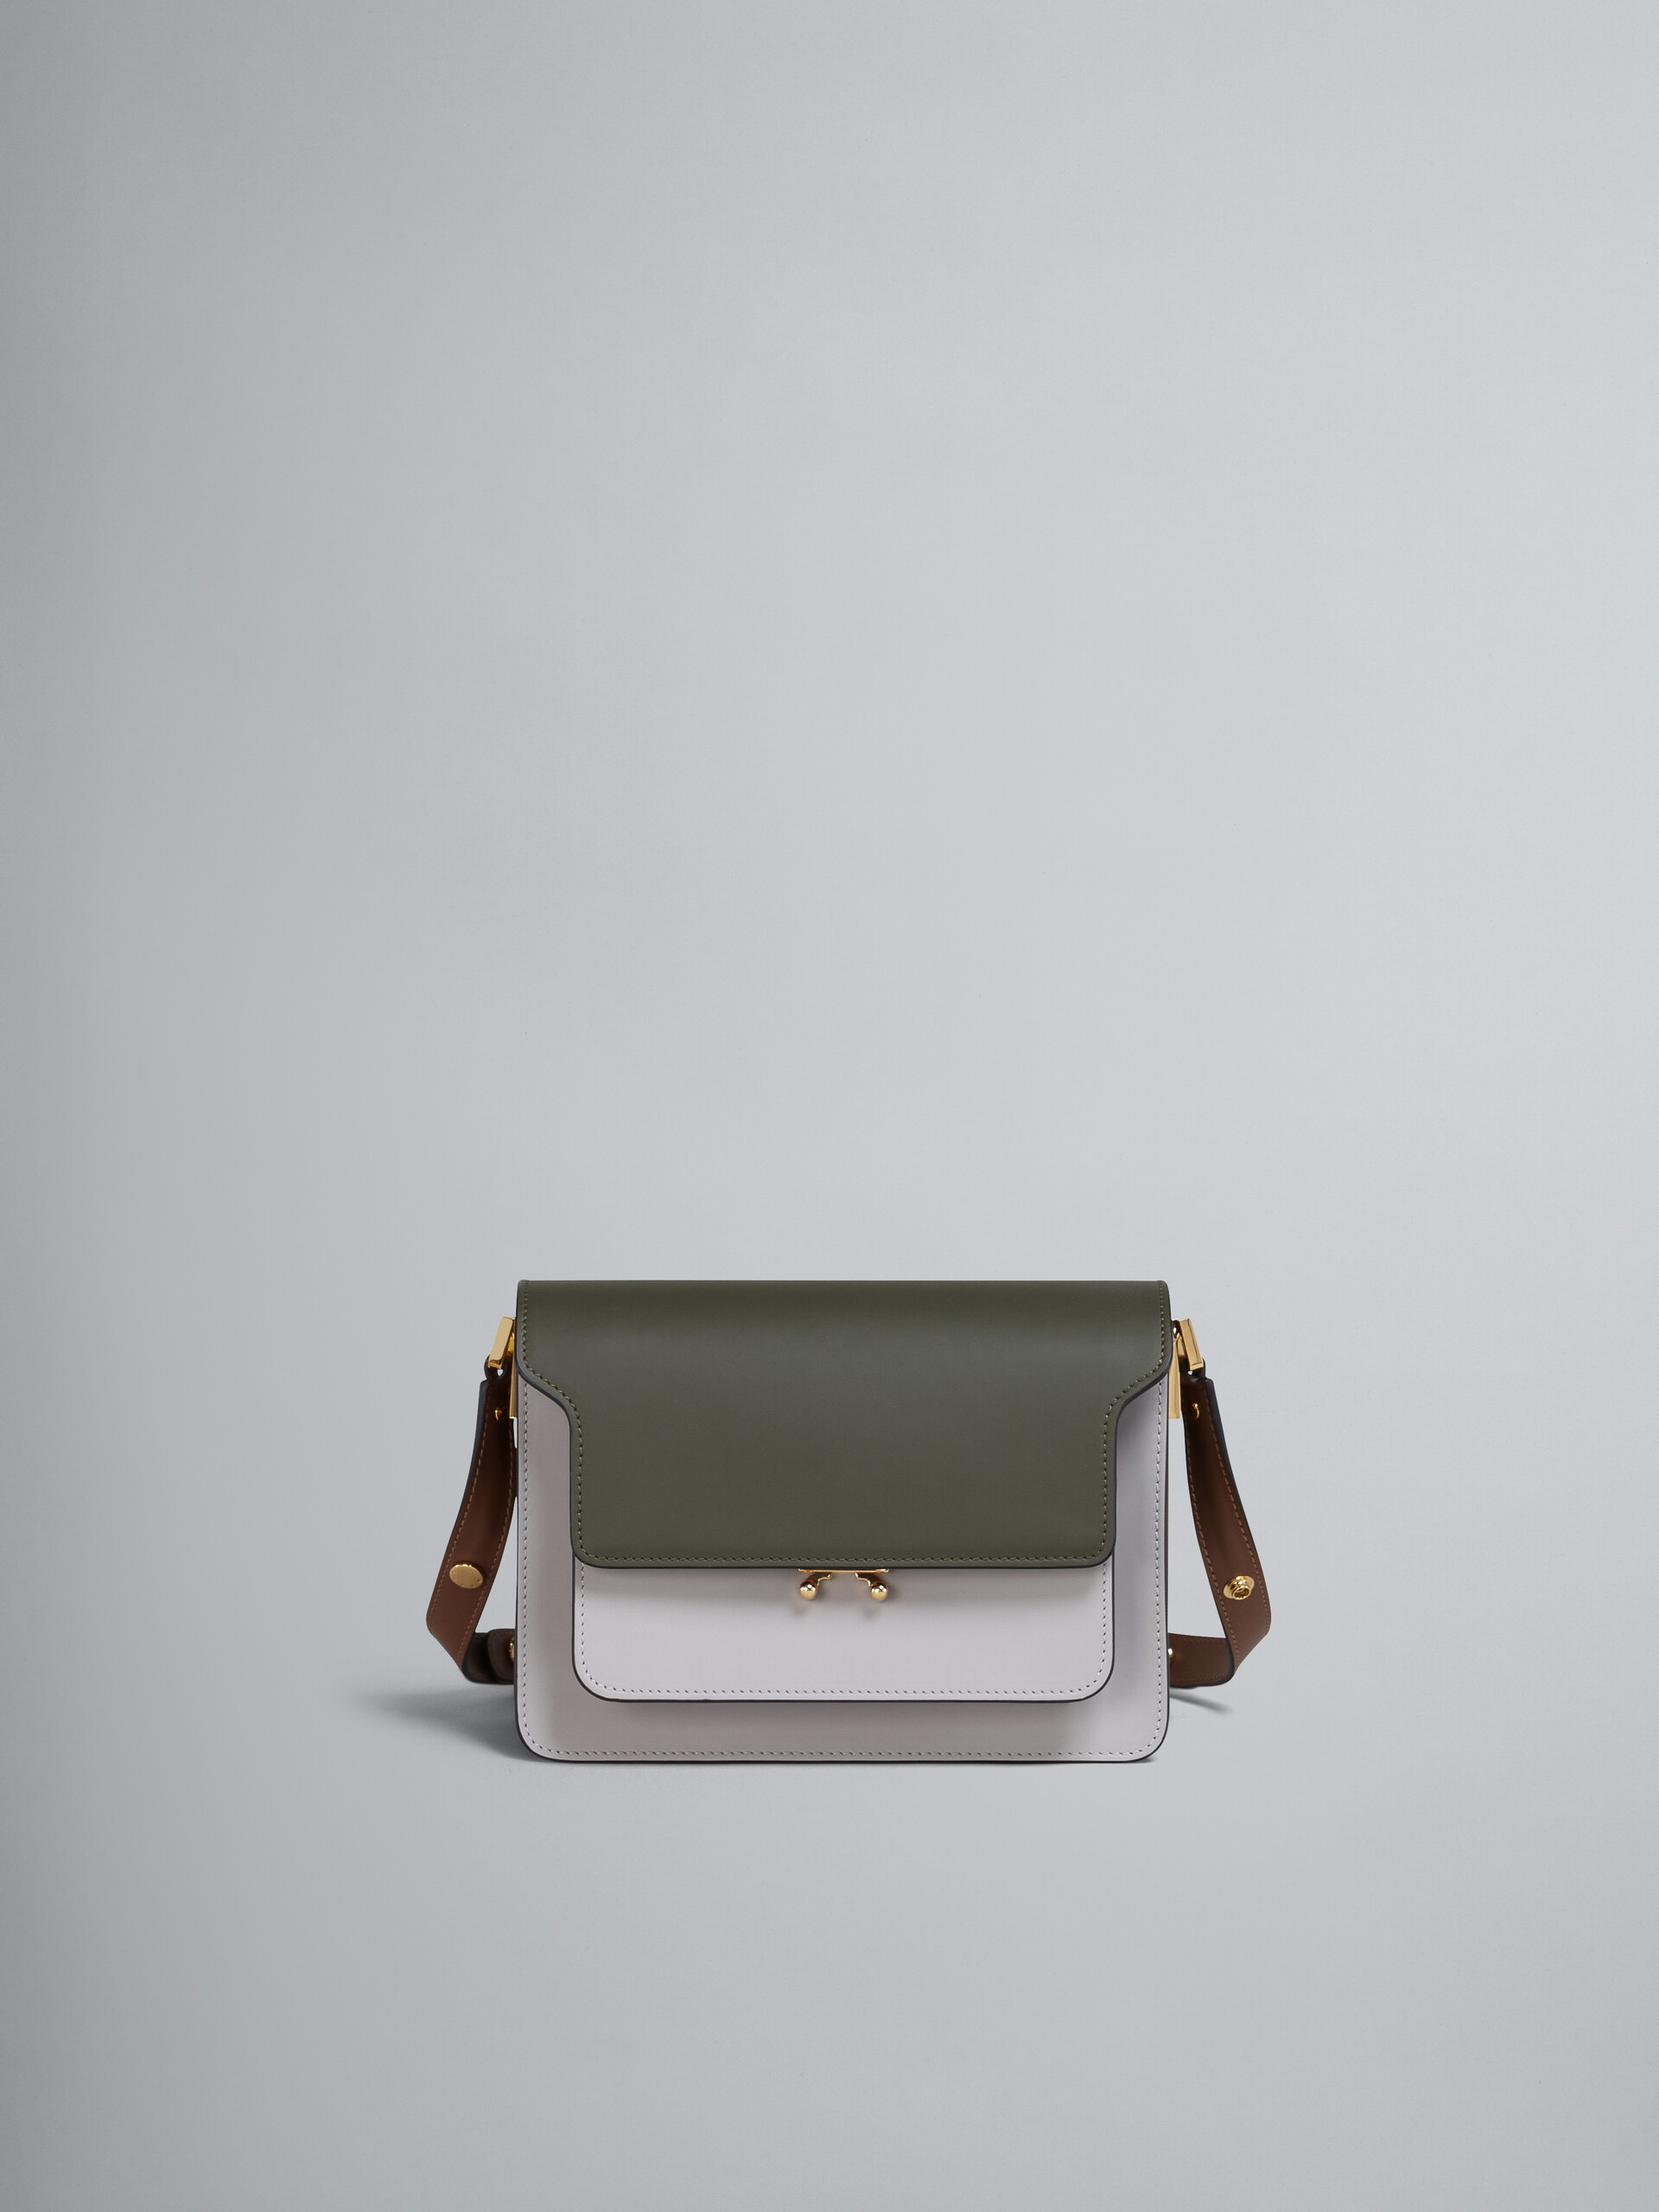 TRUNK medium bag in green grey and brown leather - Shoulder Bag - Image 1